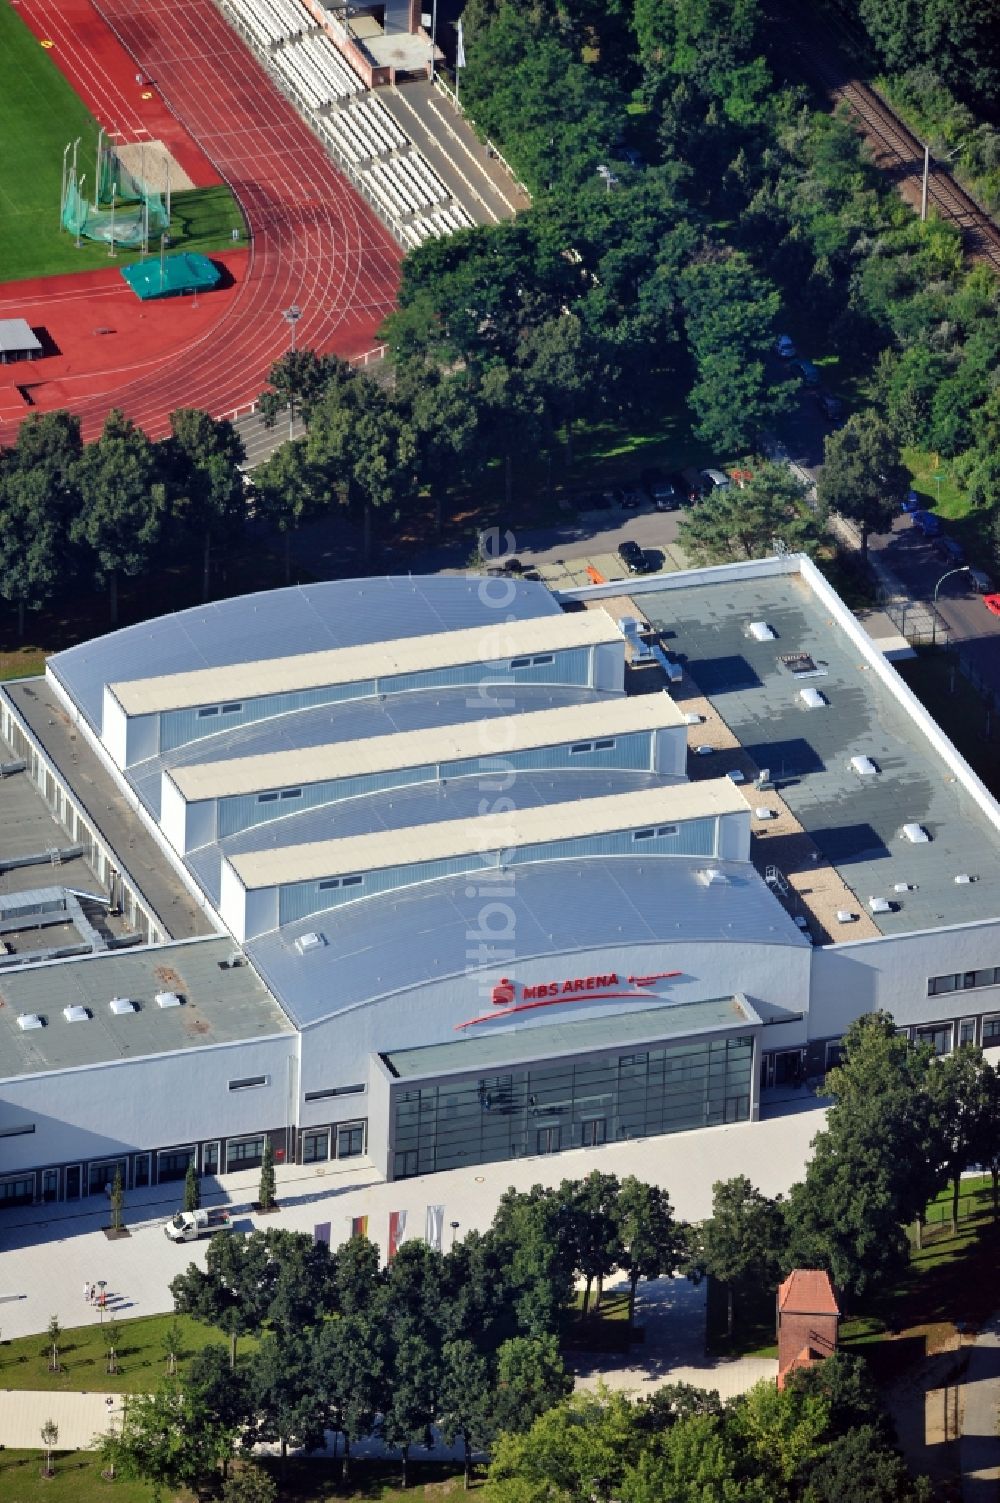 Luftaufnahme Potsdam - MBS Arena in Potsdam im Bundesland Brandenburg